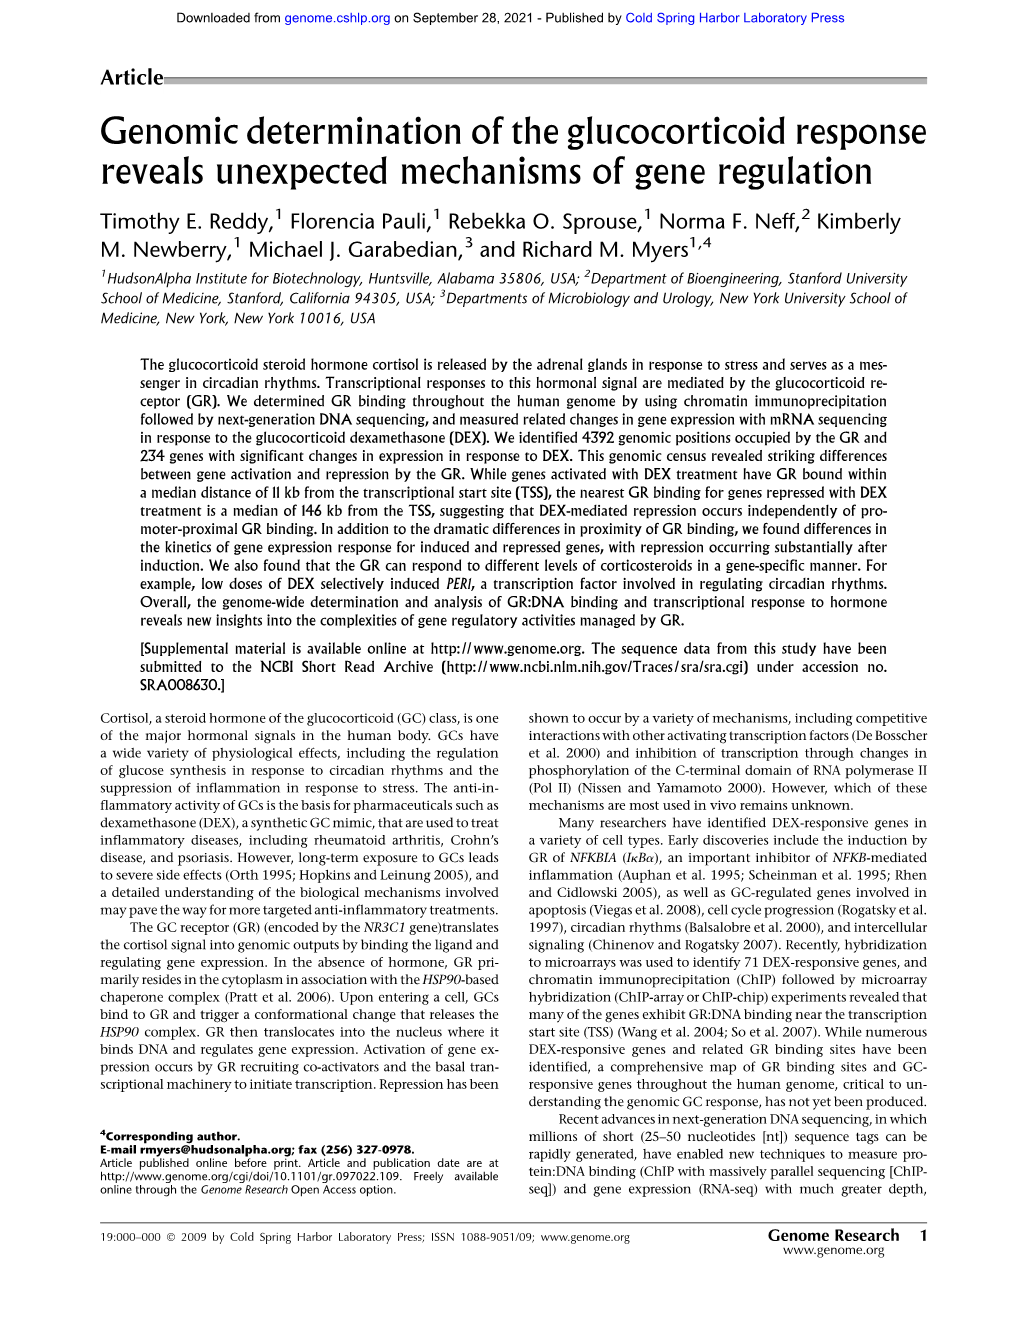 Genomic Determination of the Glucocorticoid Response Reveals Unexpected Mechanisms of Gene Regulation